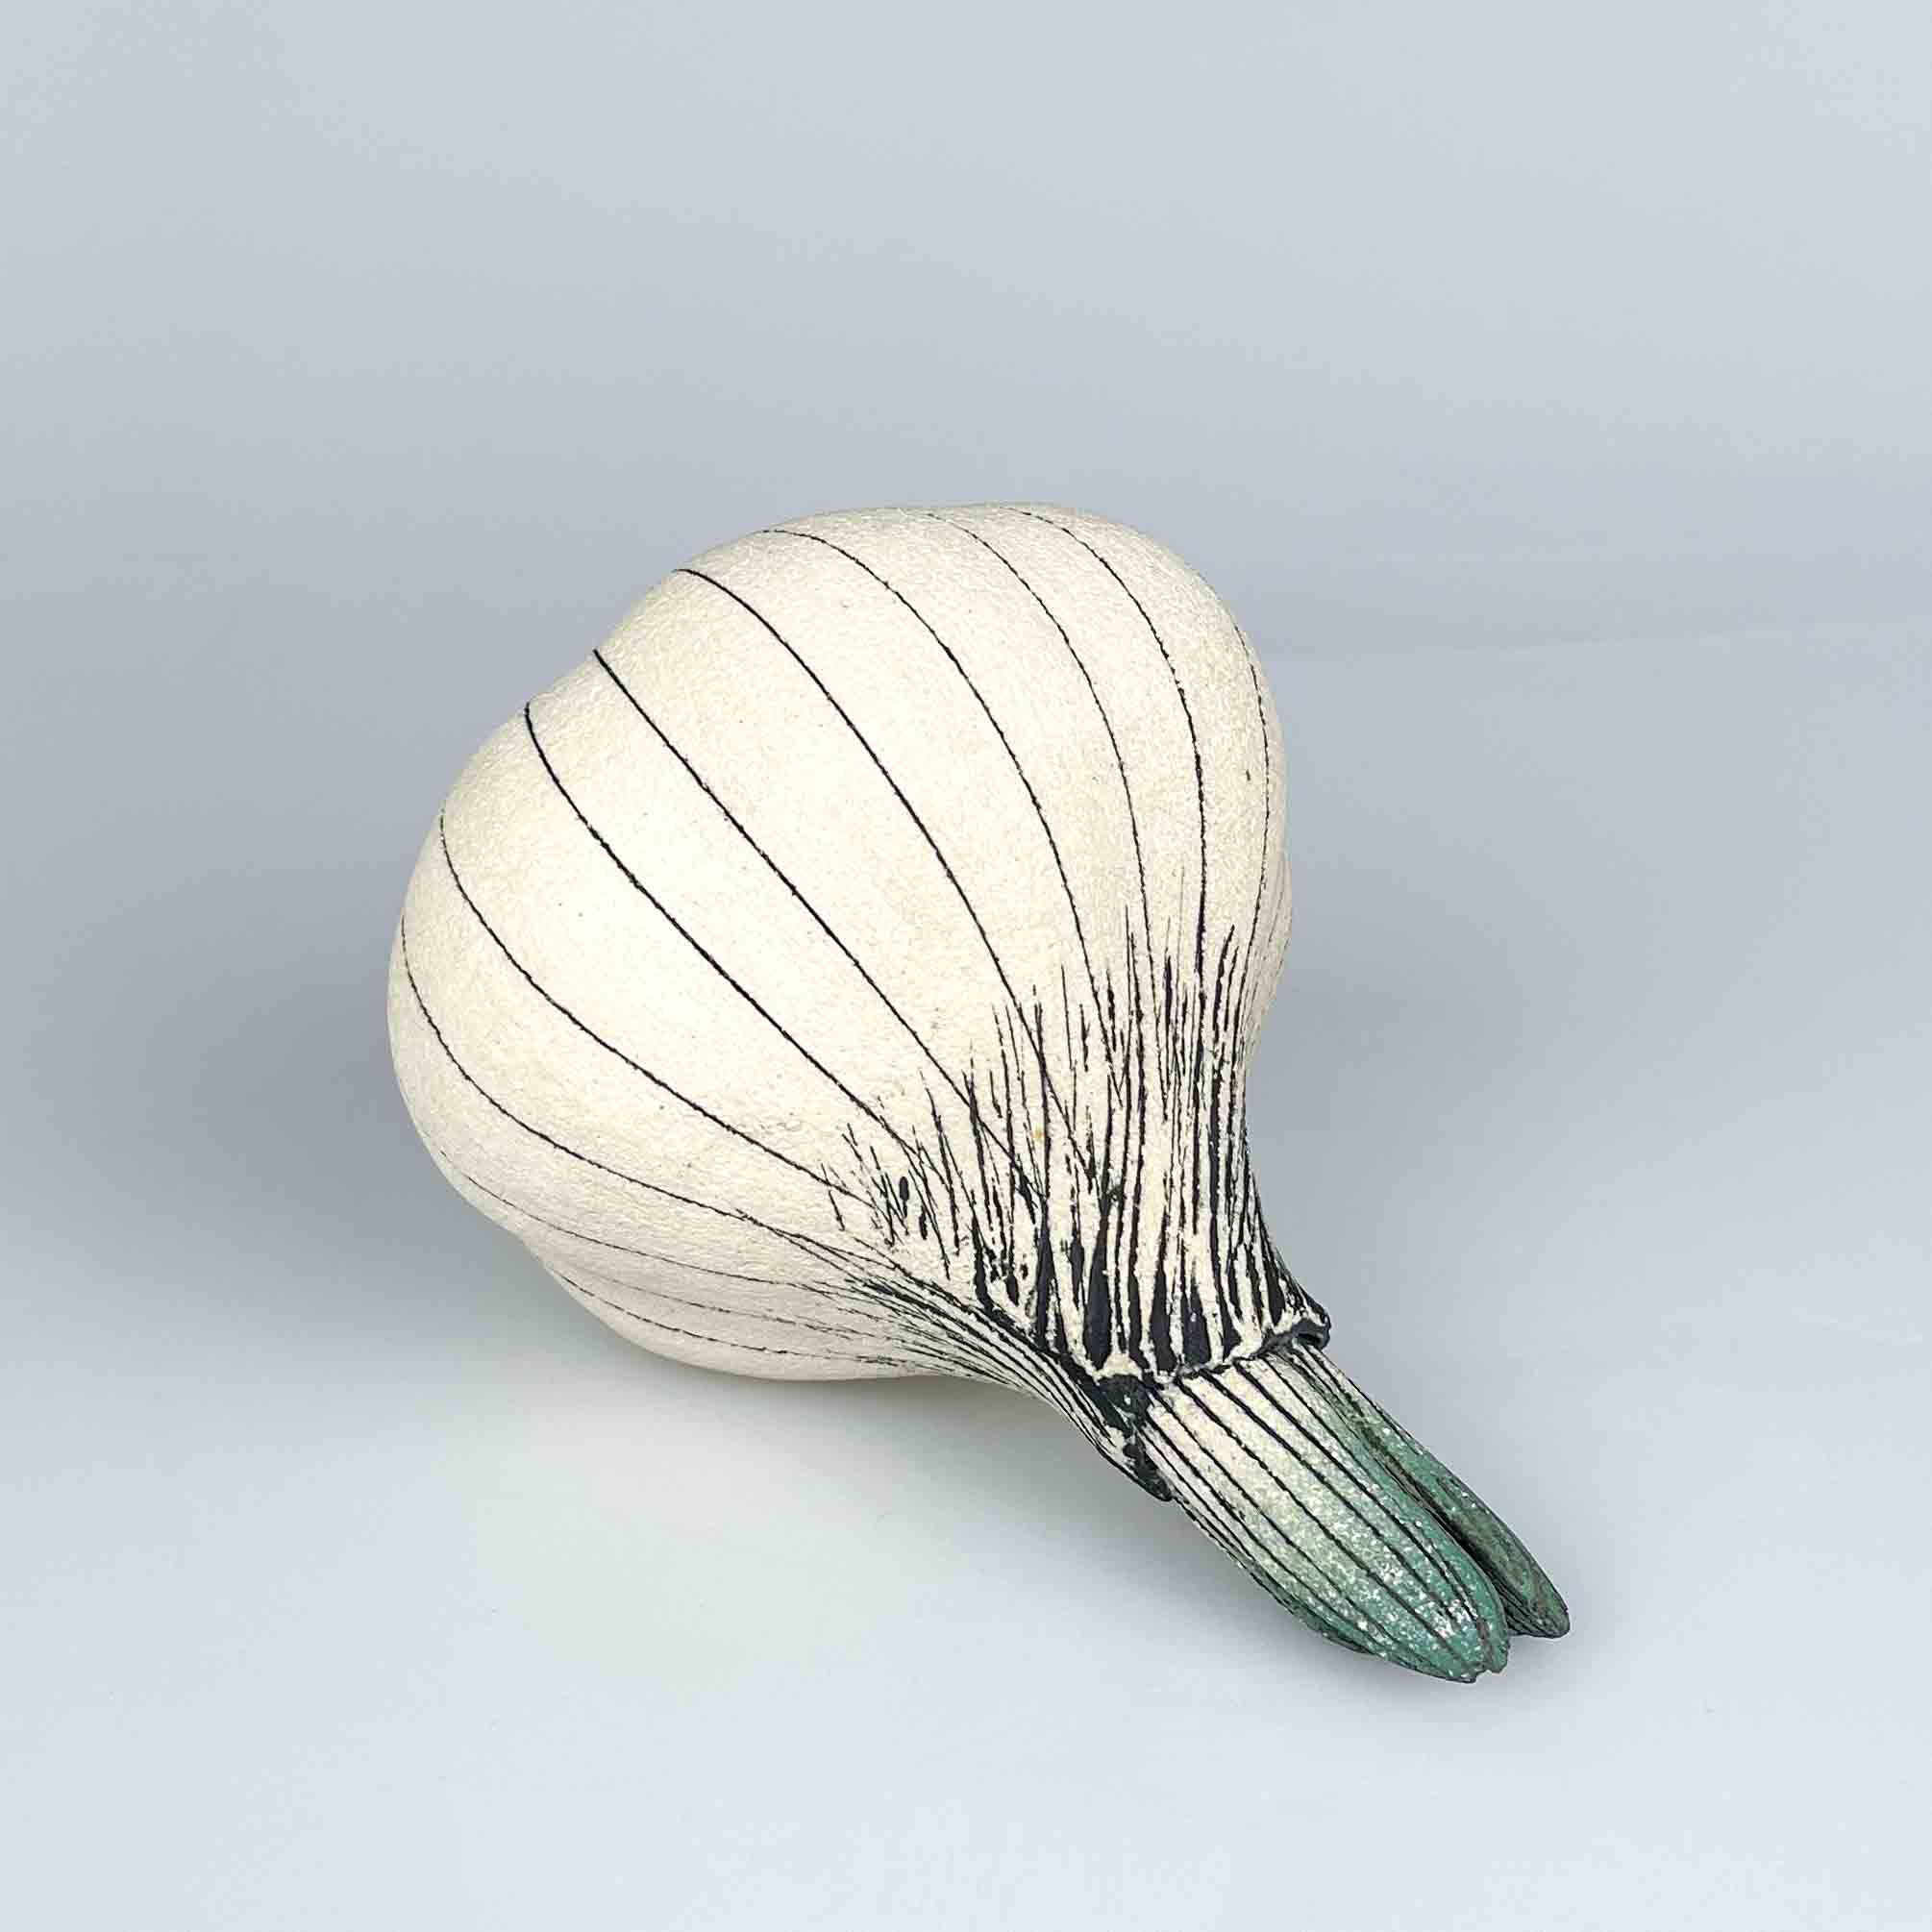 Gunvor Olin-Grönqvist - A stoneware sculpture of a garlic bulb - Arabia Finland ca. 1980